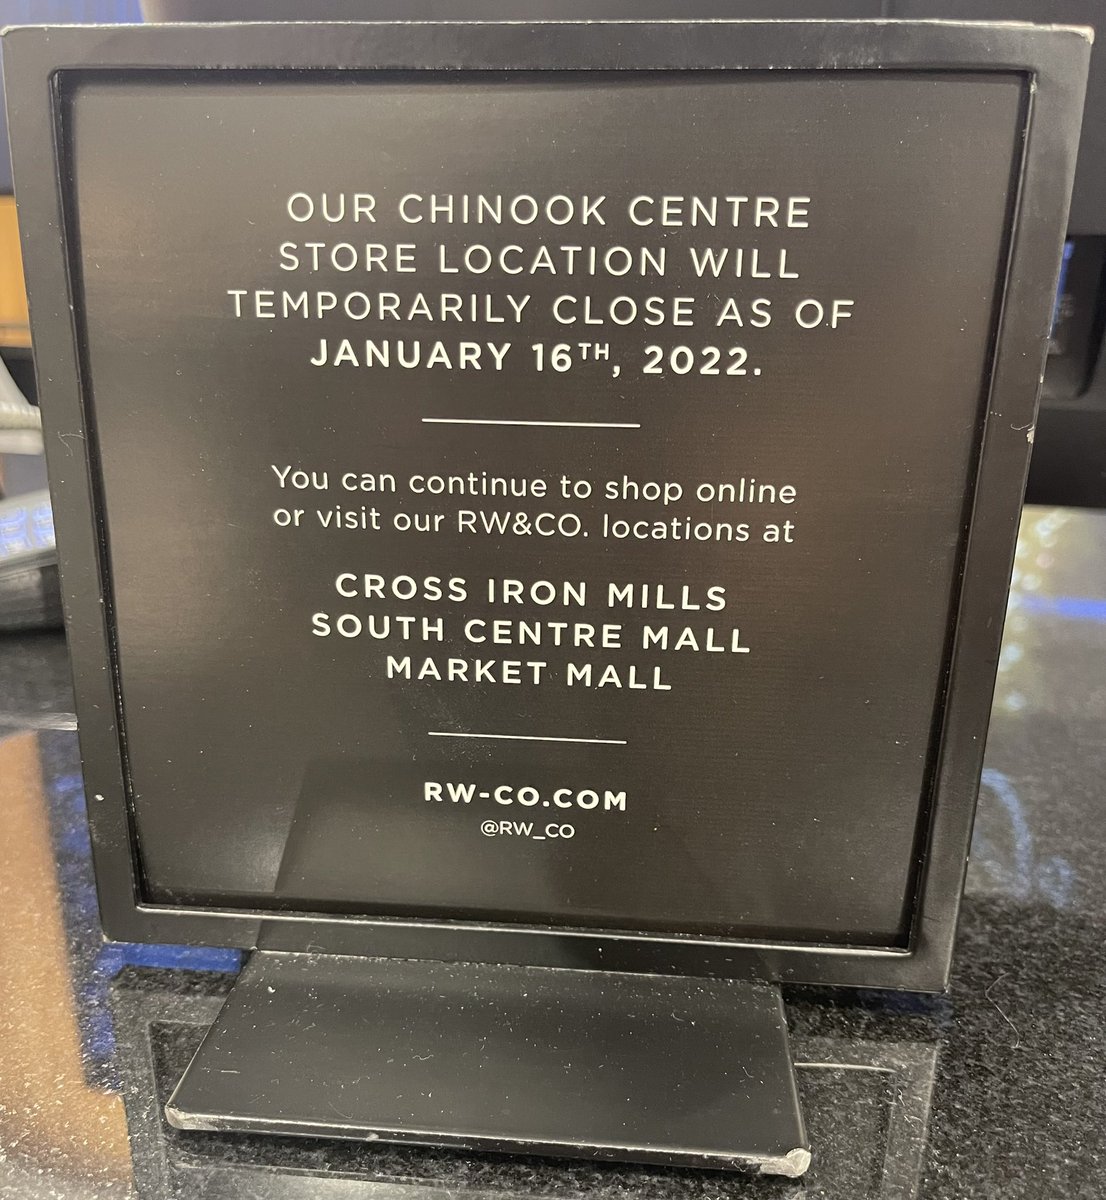 RWCO is closing temporarily at Chinook mall, last day is this Saturday 

#yycshopping #yycretail #yyc #Calgary #Calgaryshopping #Chinookmall